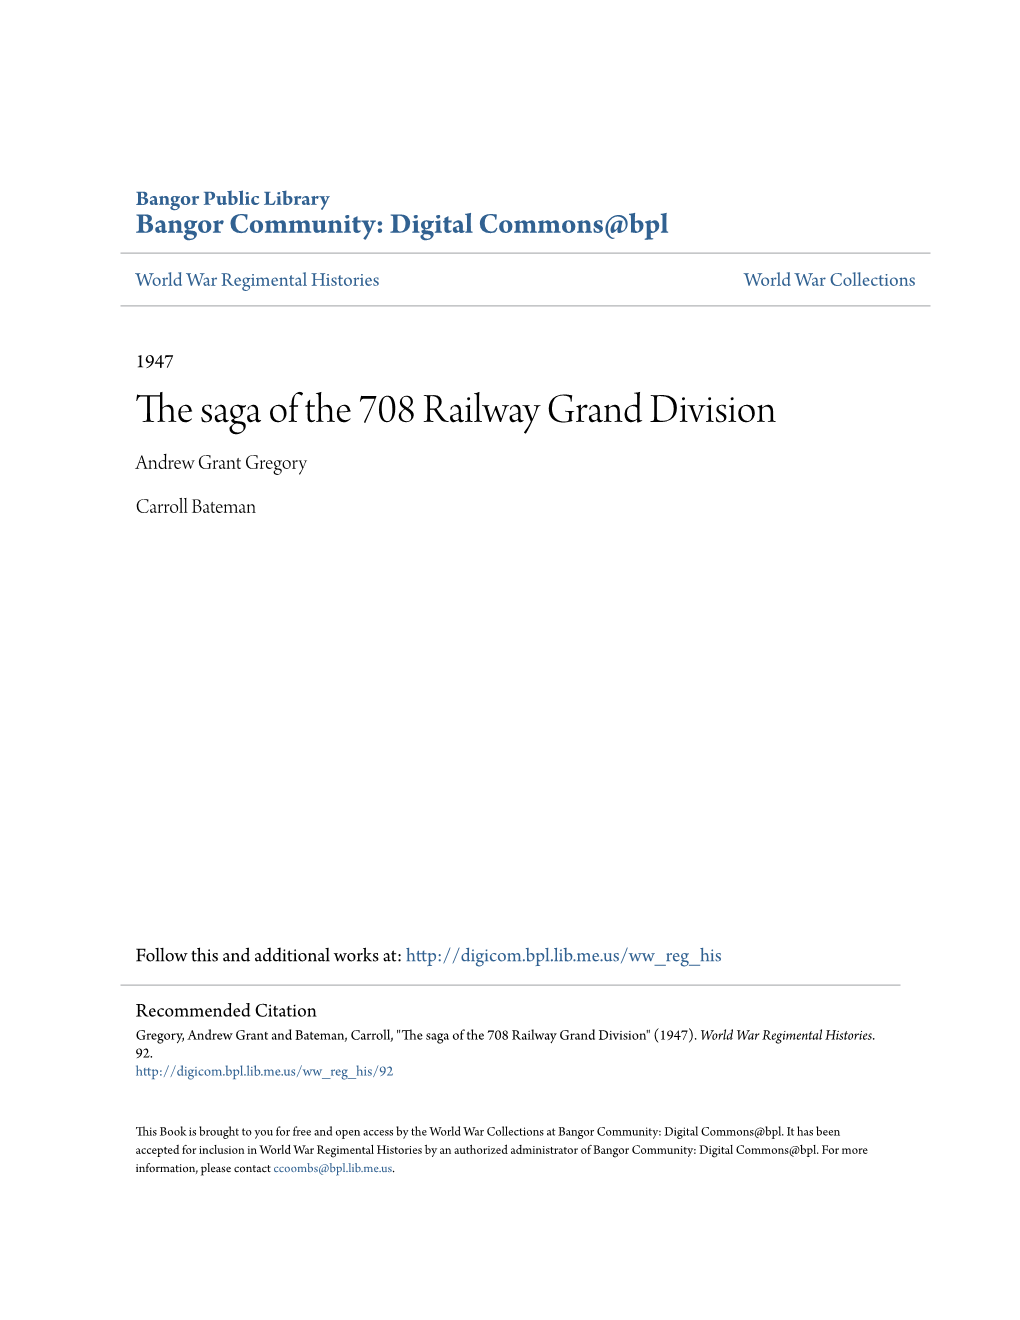 The Saga of the 708 Railway Grand Division